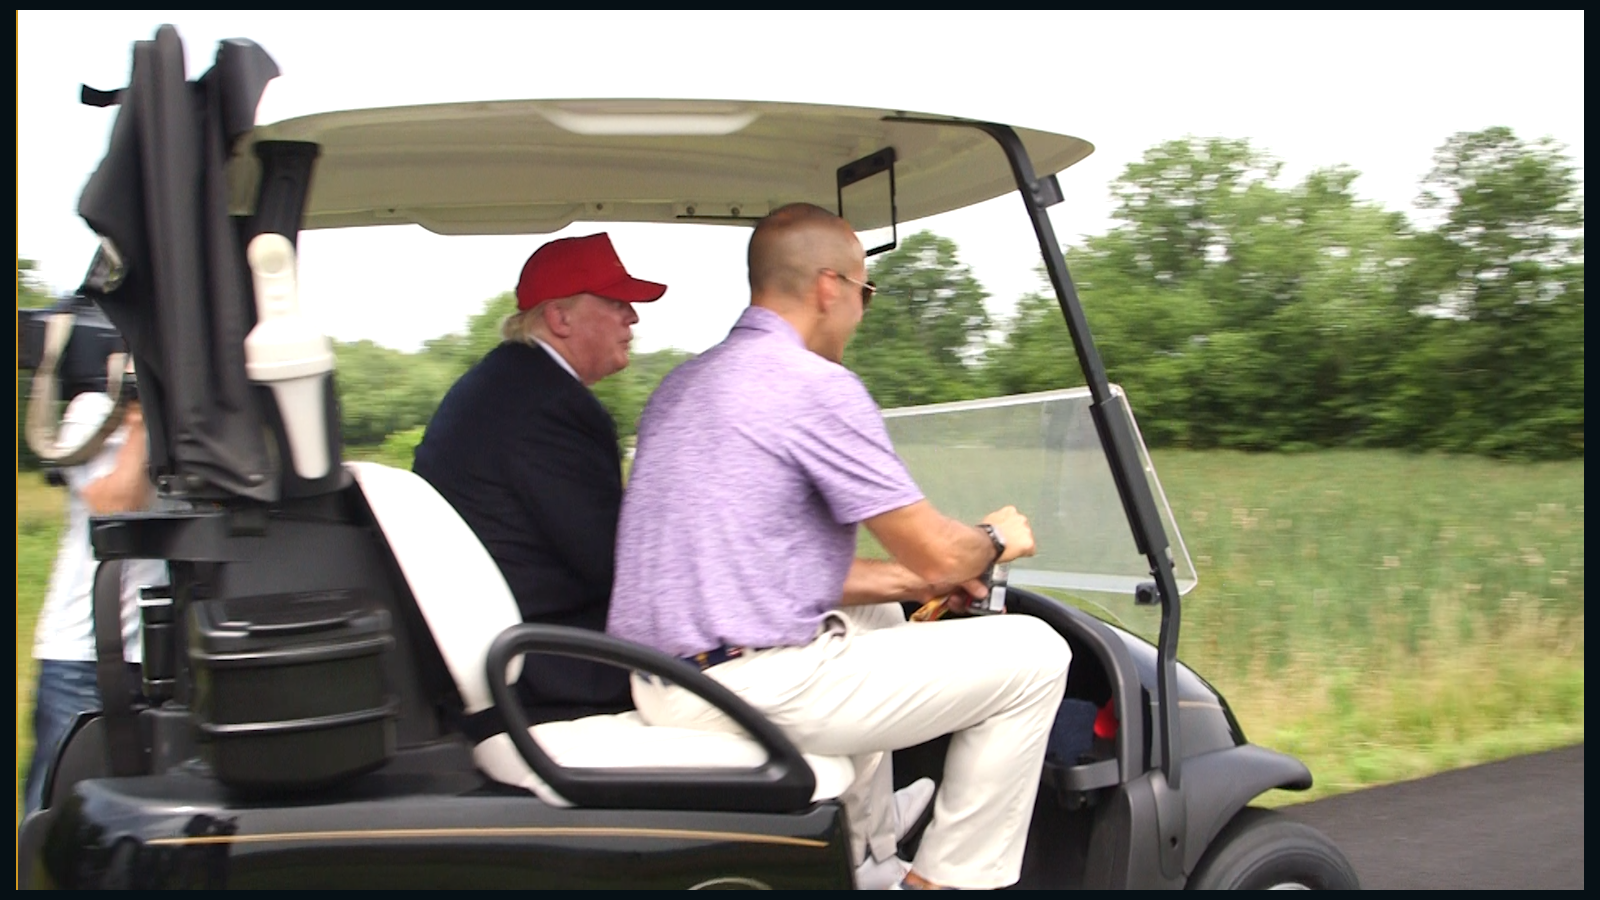 Trump Burying Wife On Golf Course